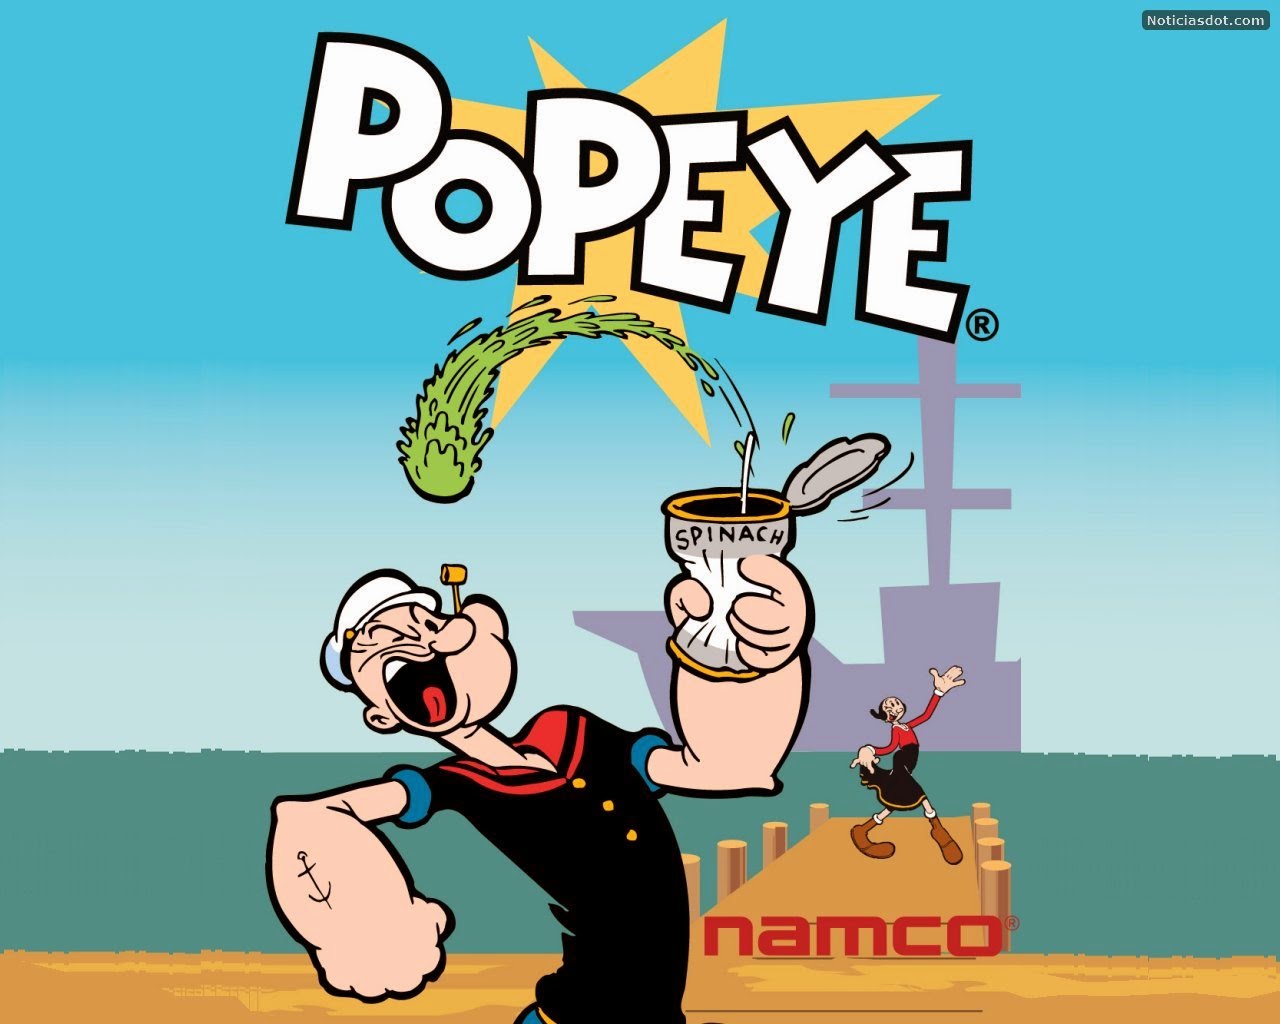 Popeye The Sailor Man All Episodes Full in Hindi HD - Drama Cartoon